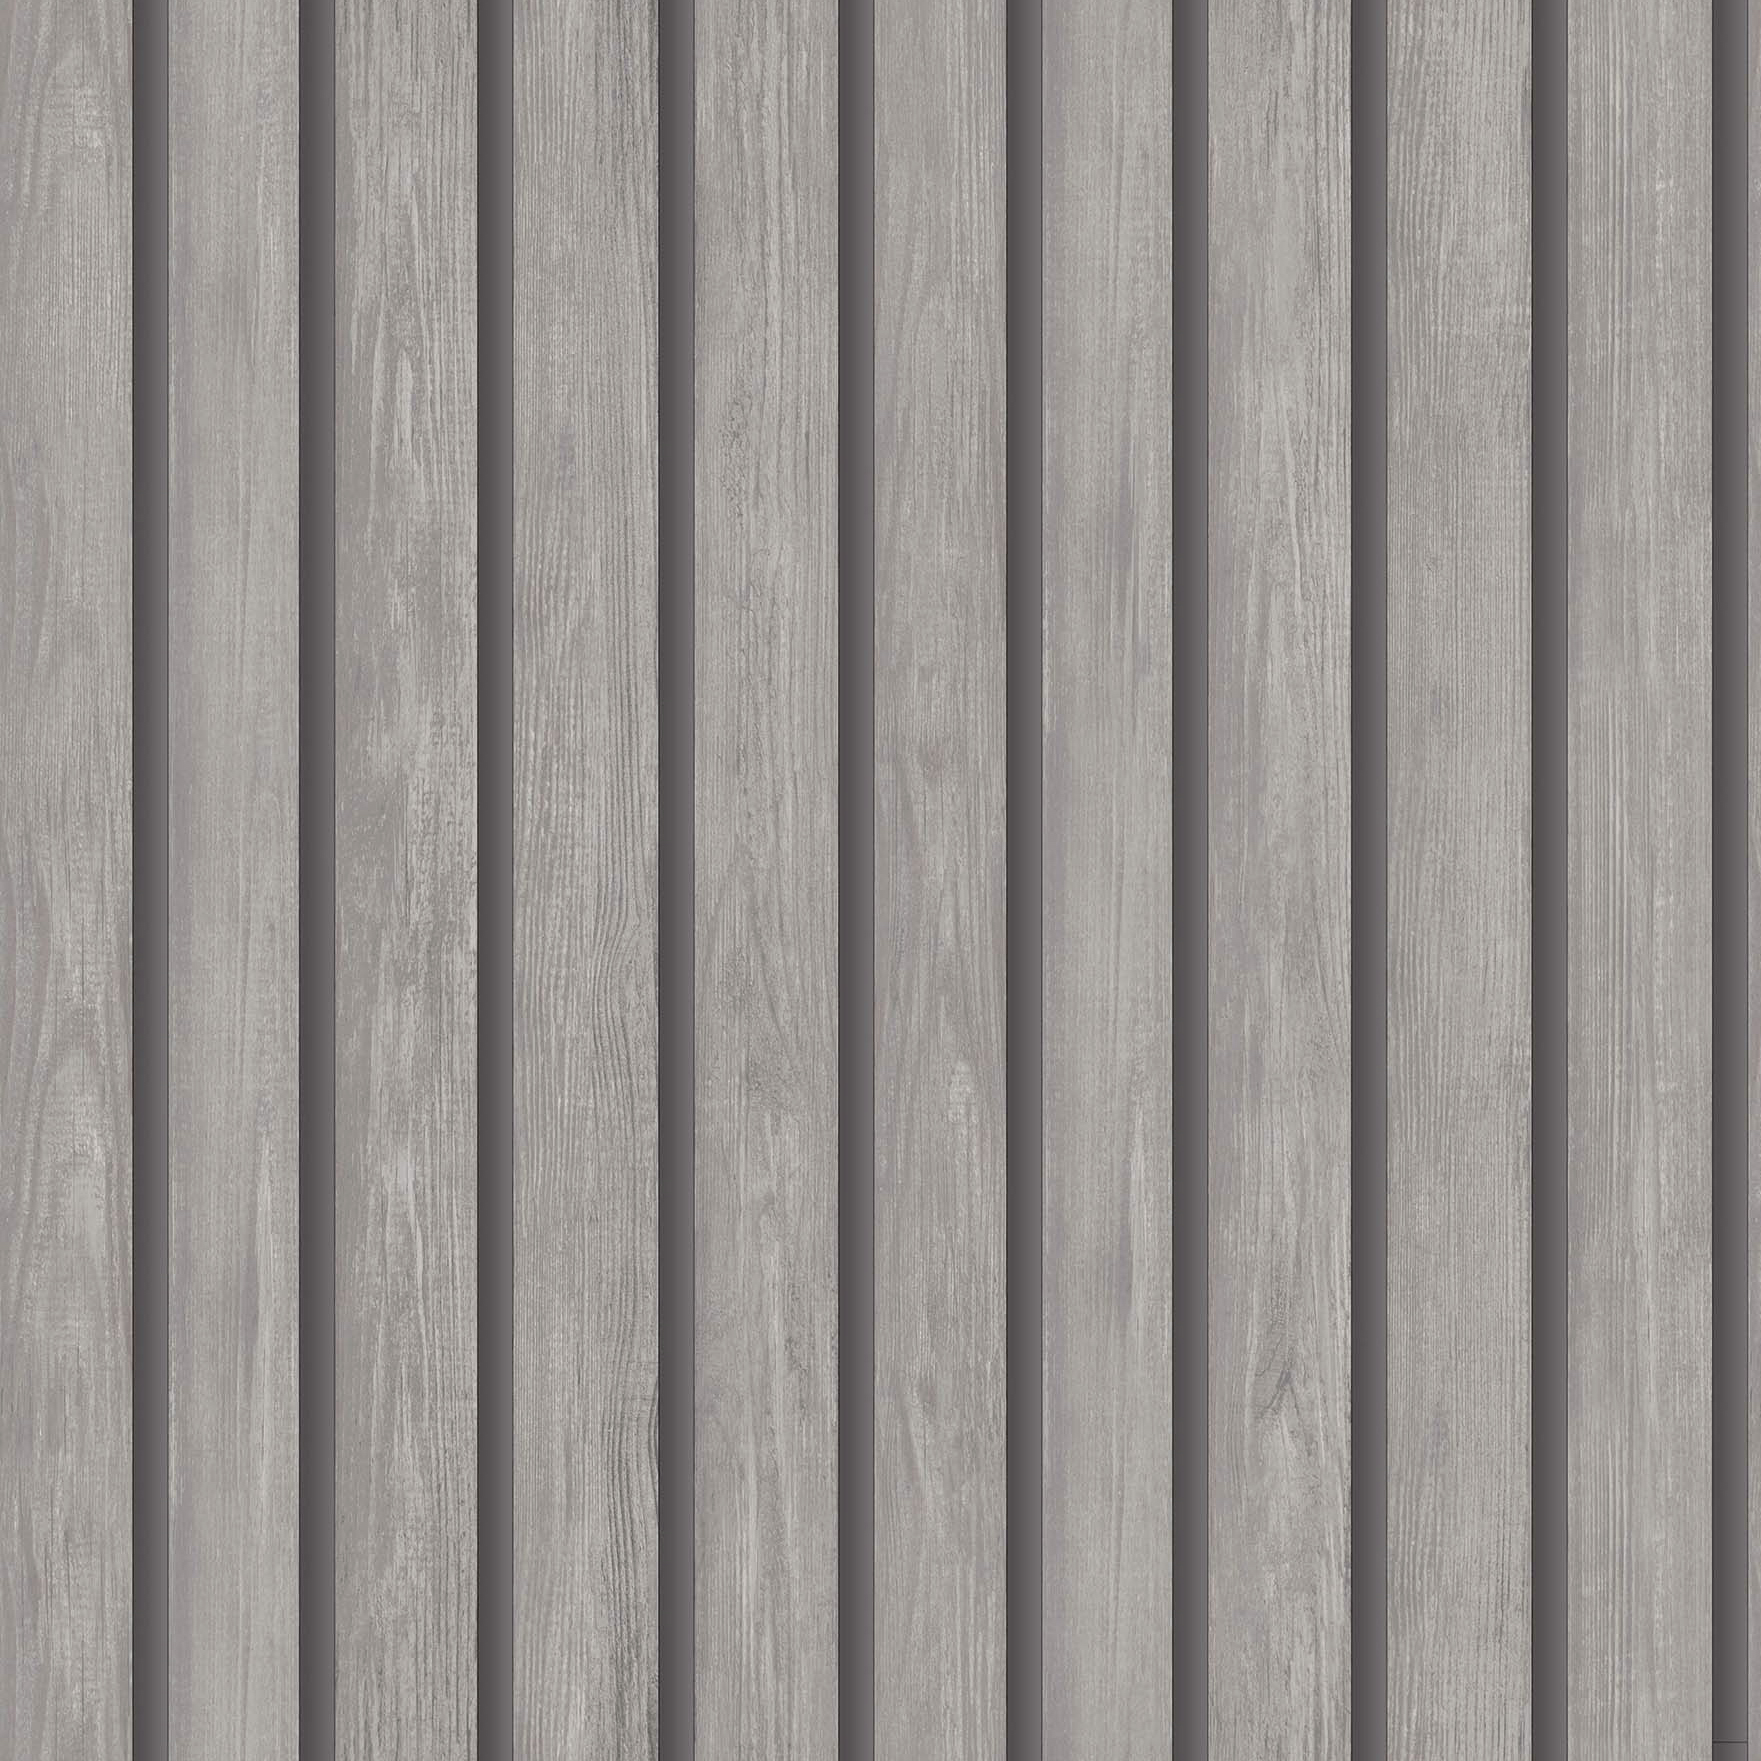 Holden Decor Wood Slat Grey Wallpaper - 10.05m x 53cm